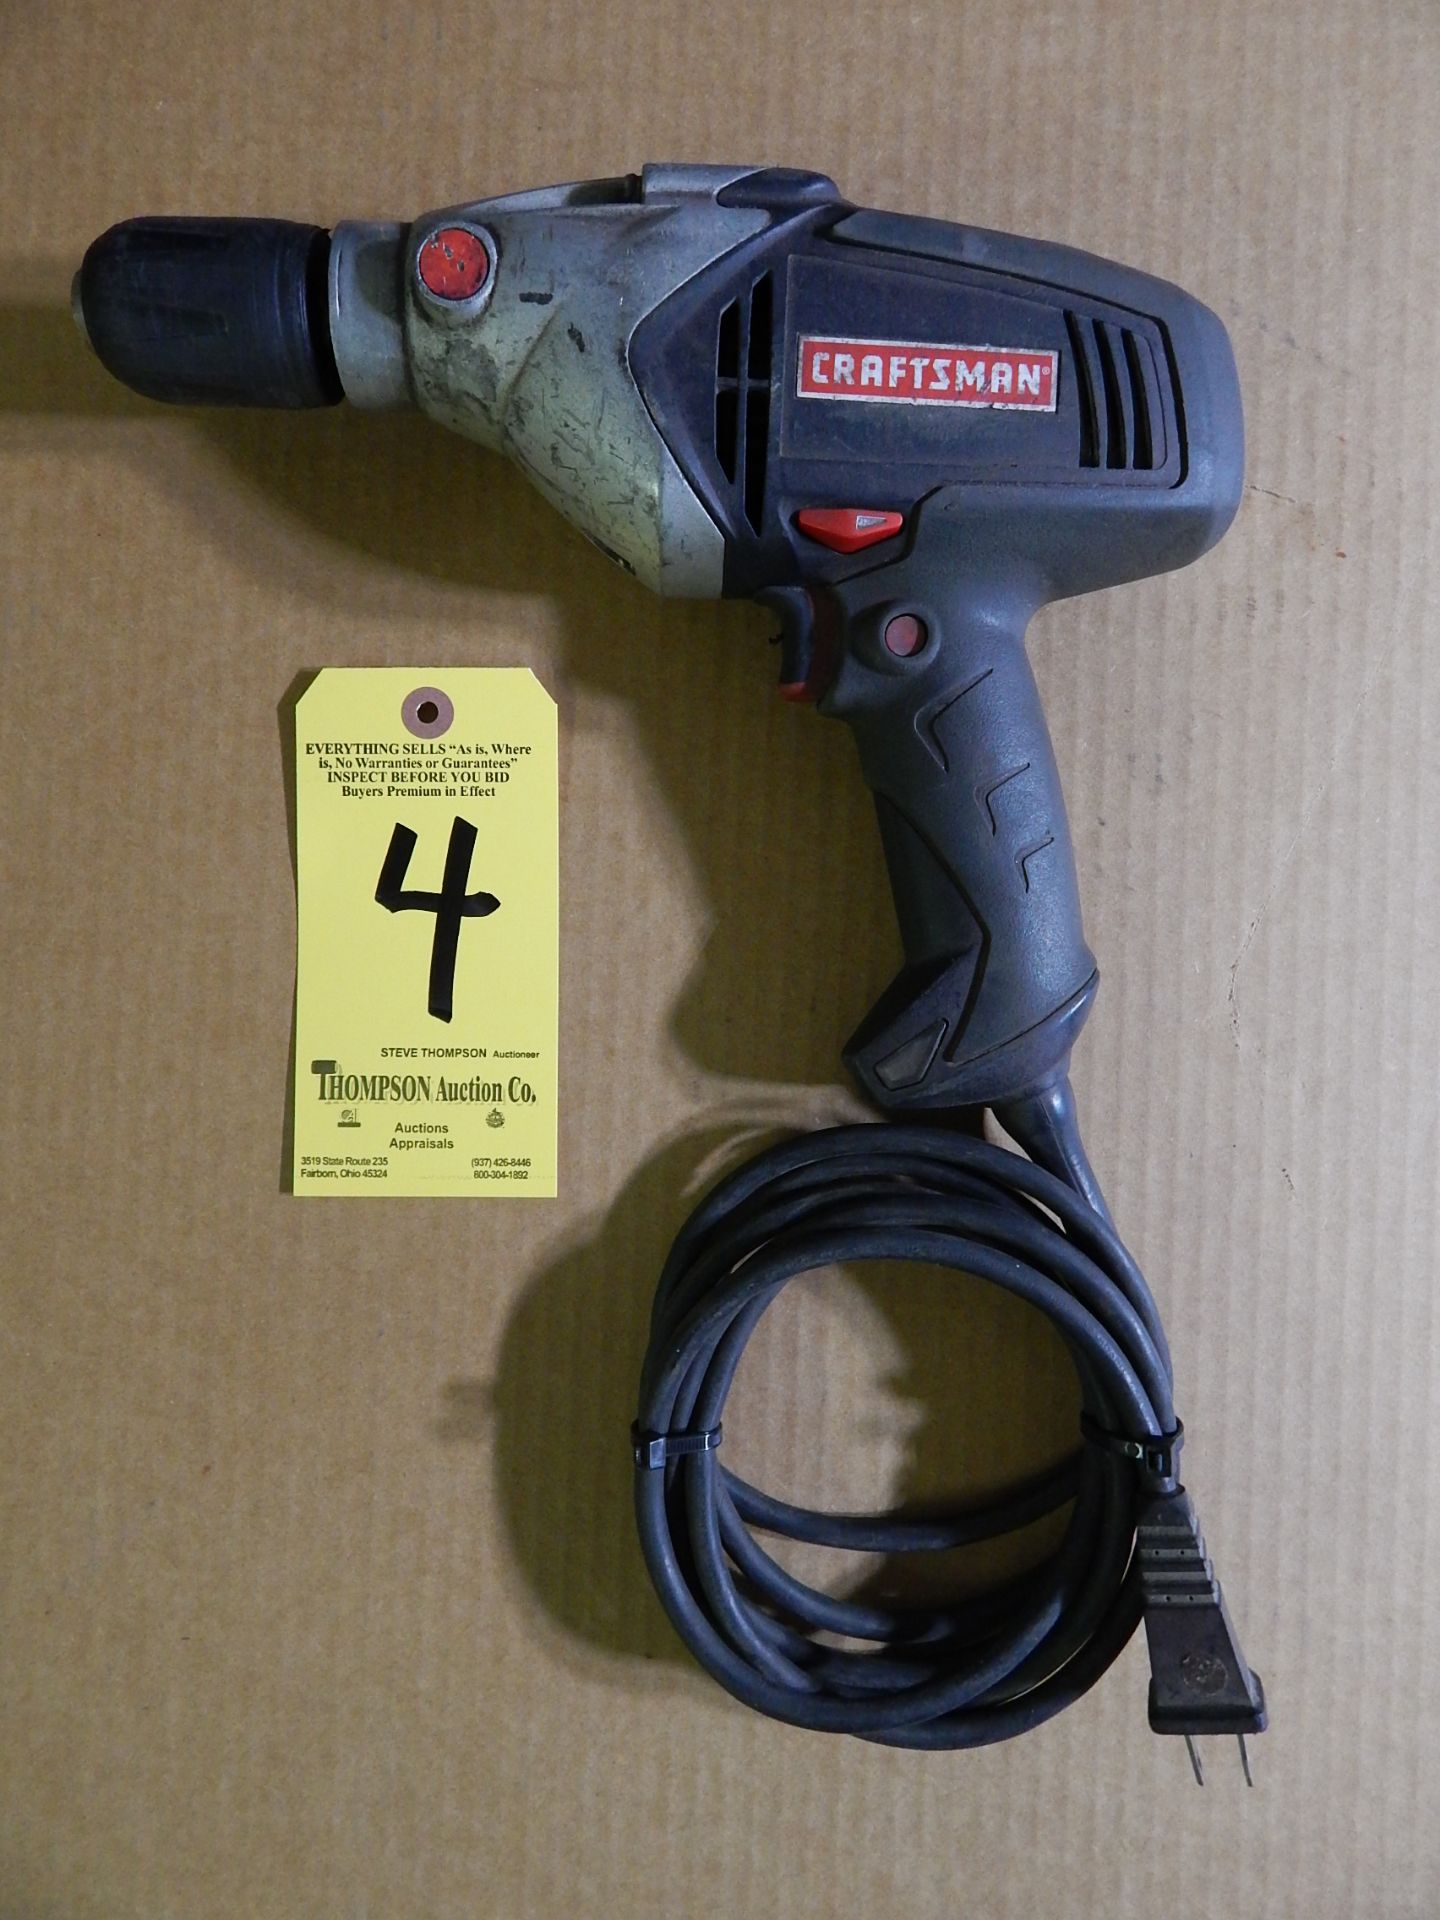 Craftsman 1/2" Electric Drill